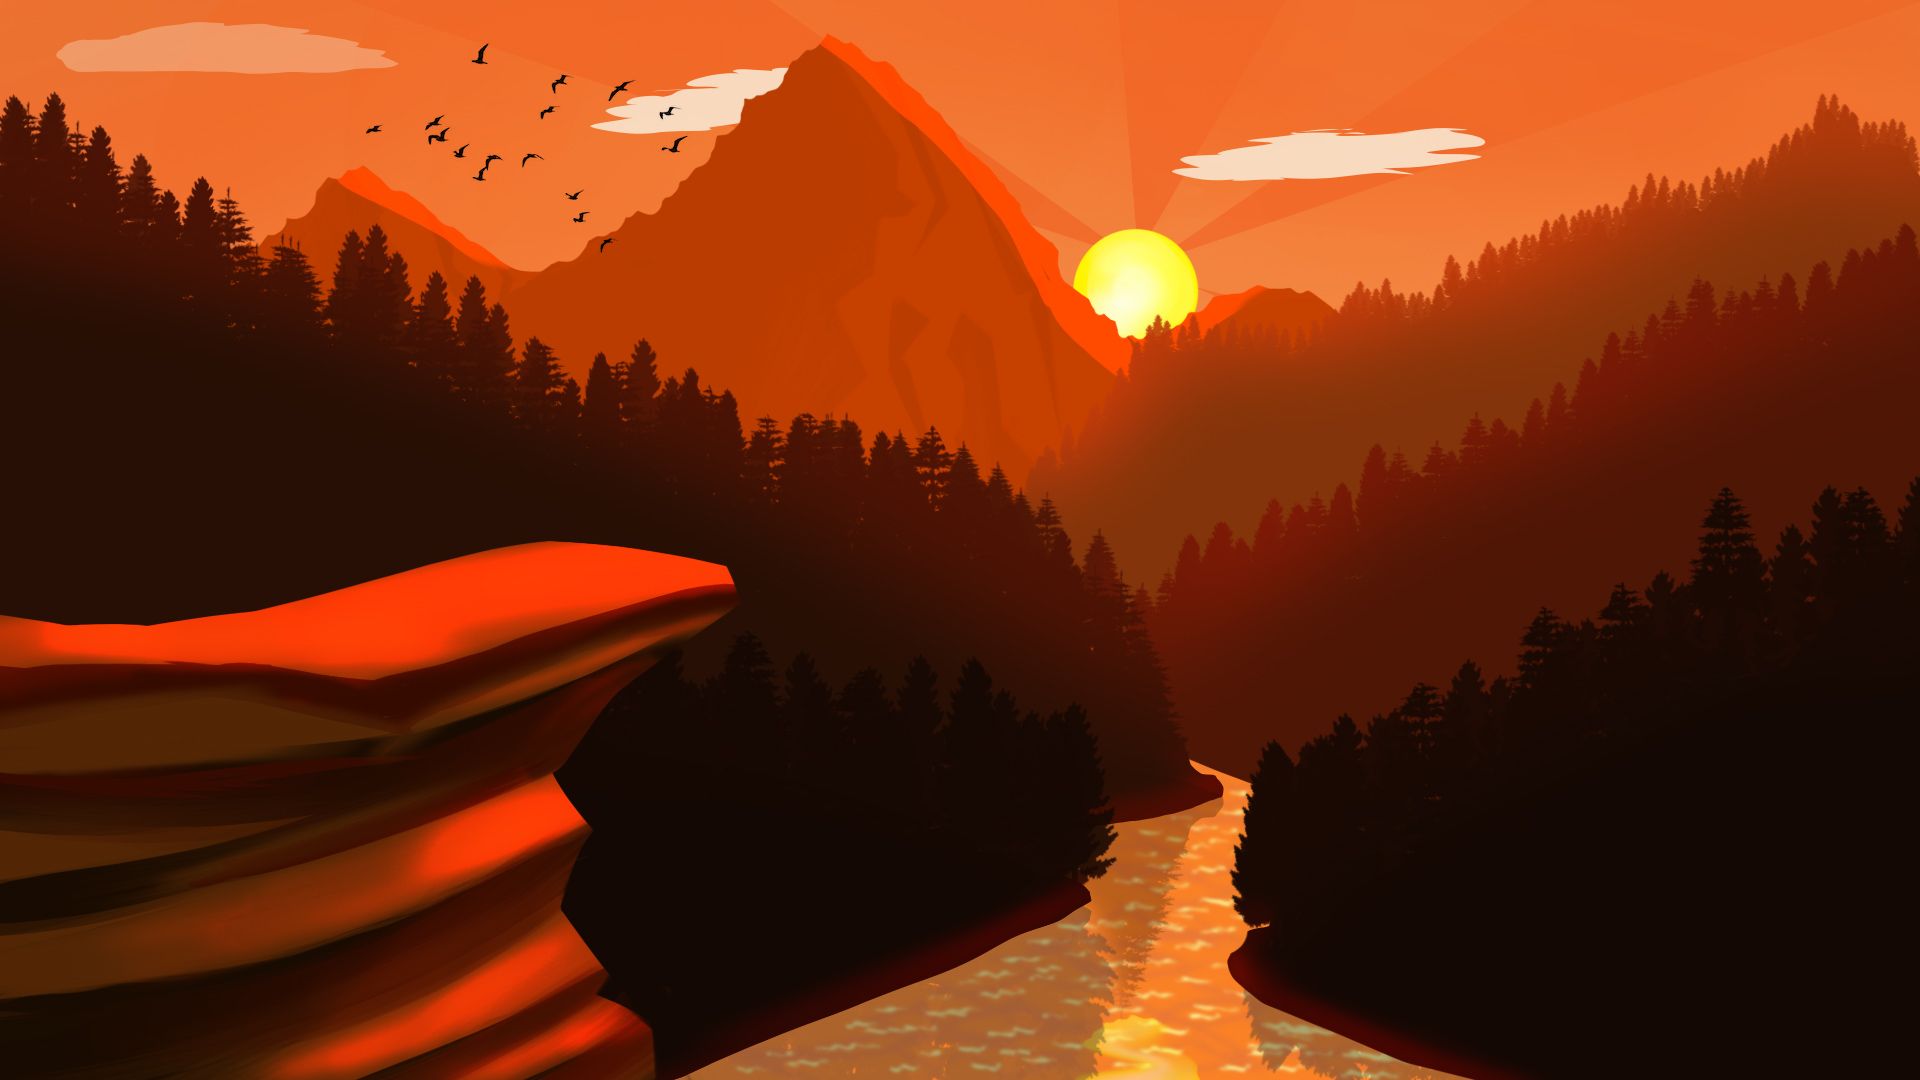 Sunset Mountains Mimimalist, HD Artist, 4k Wallpaper, Image